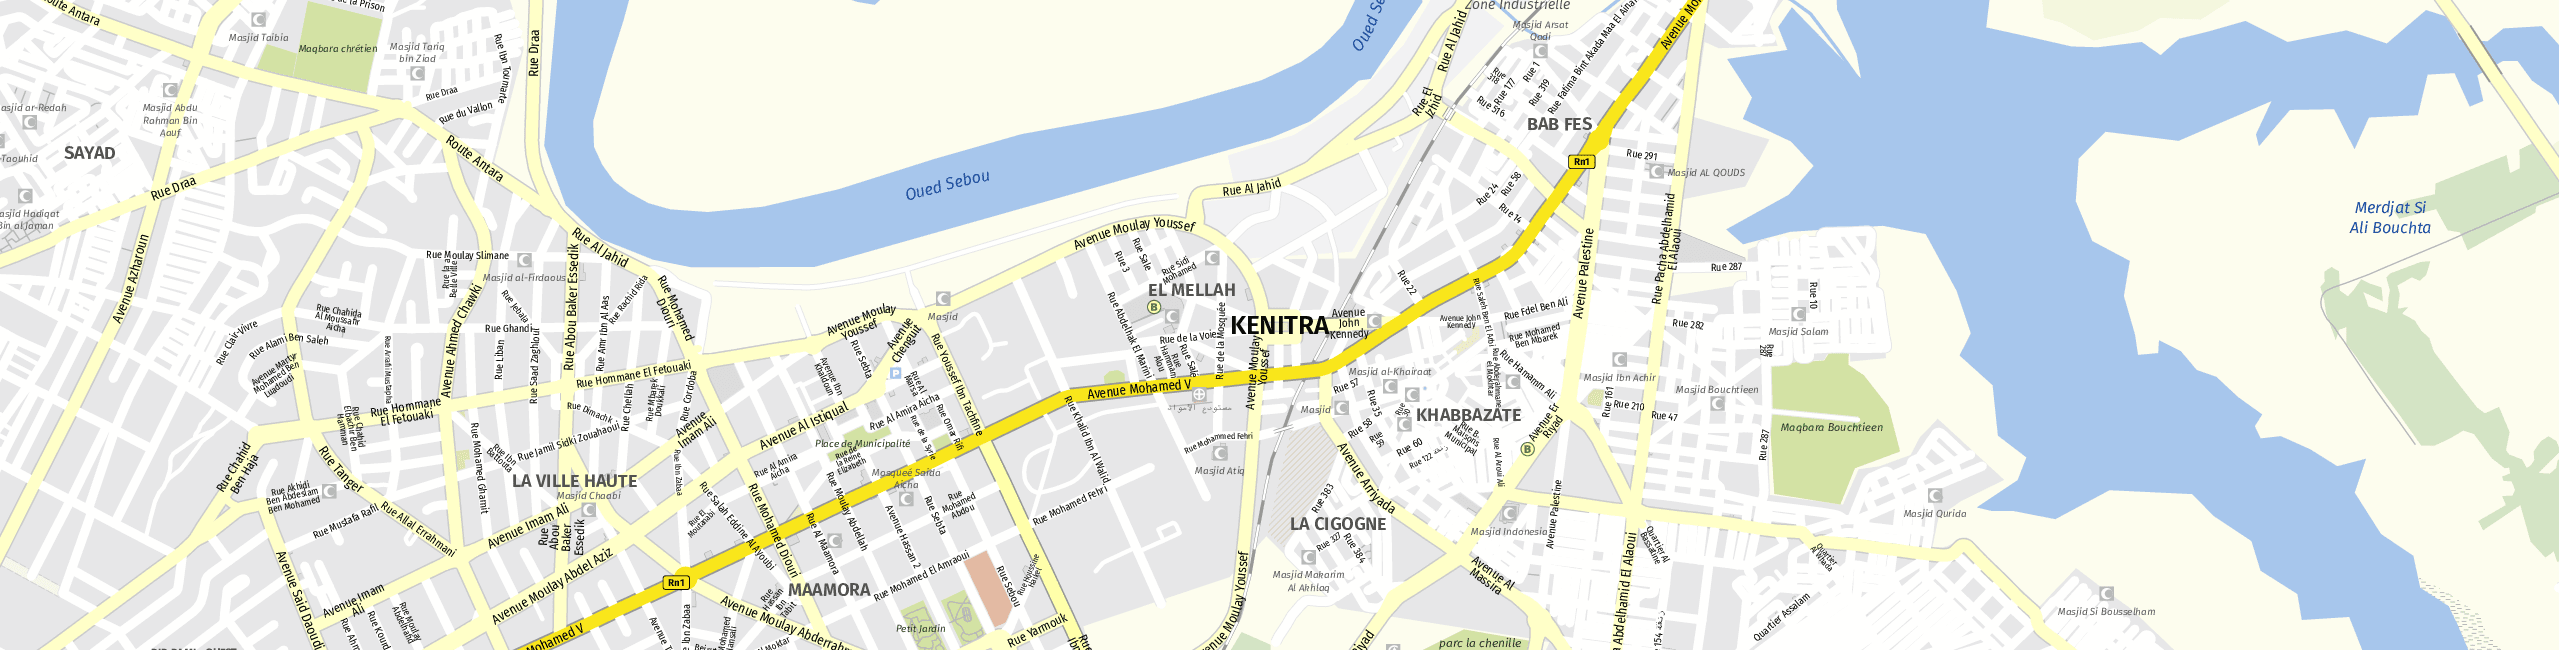 Stadtplan Kenitra zum Downloaden.